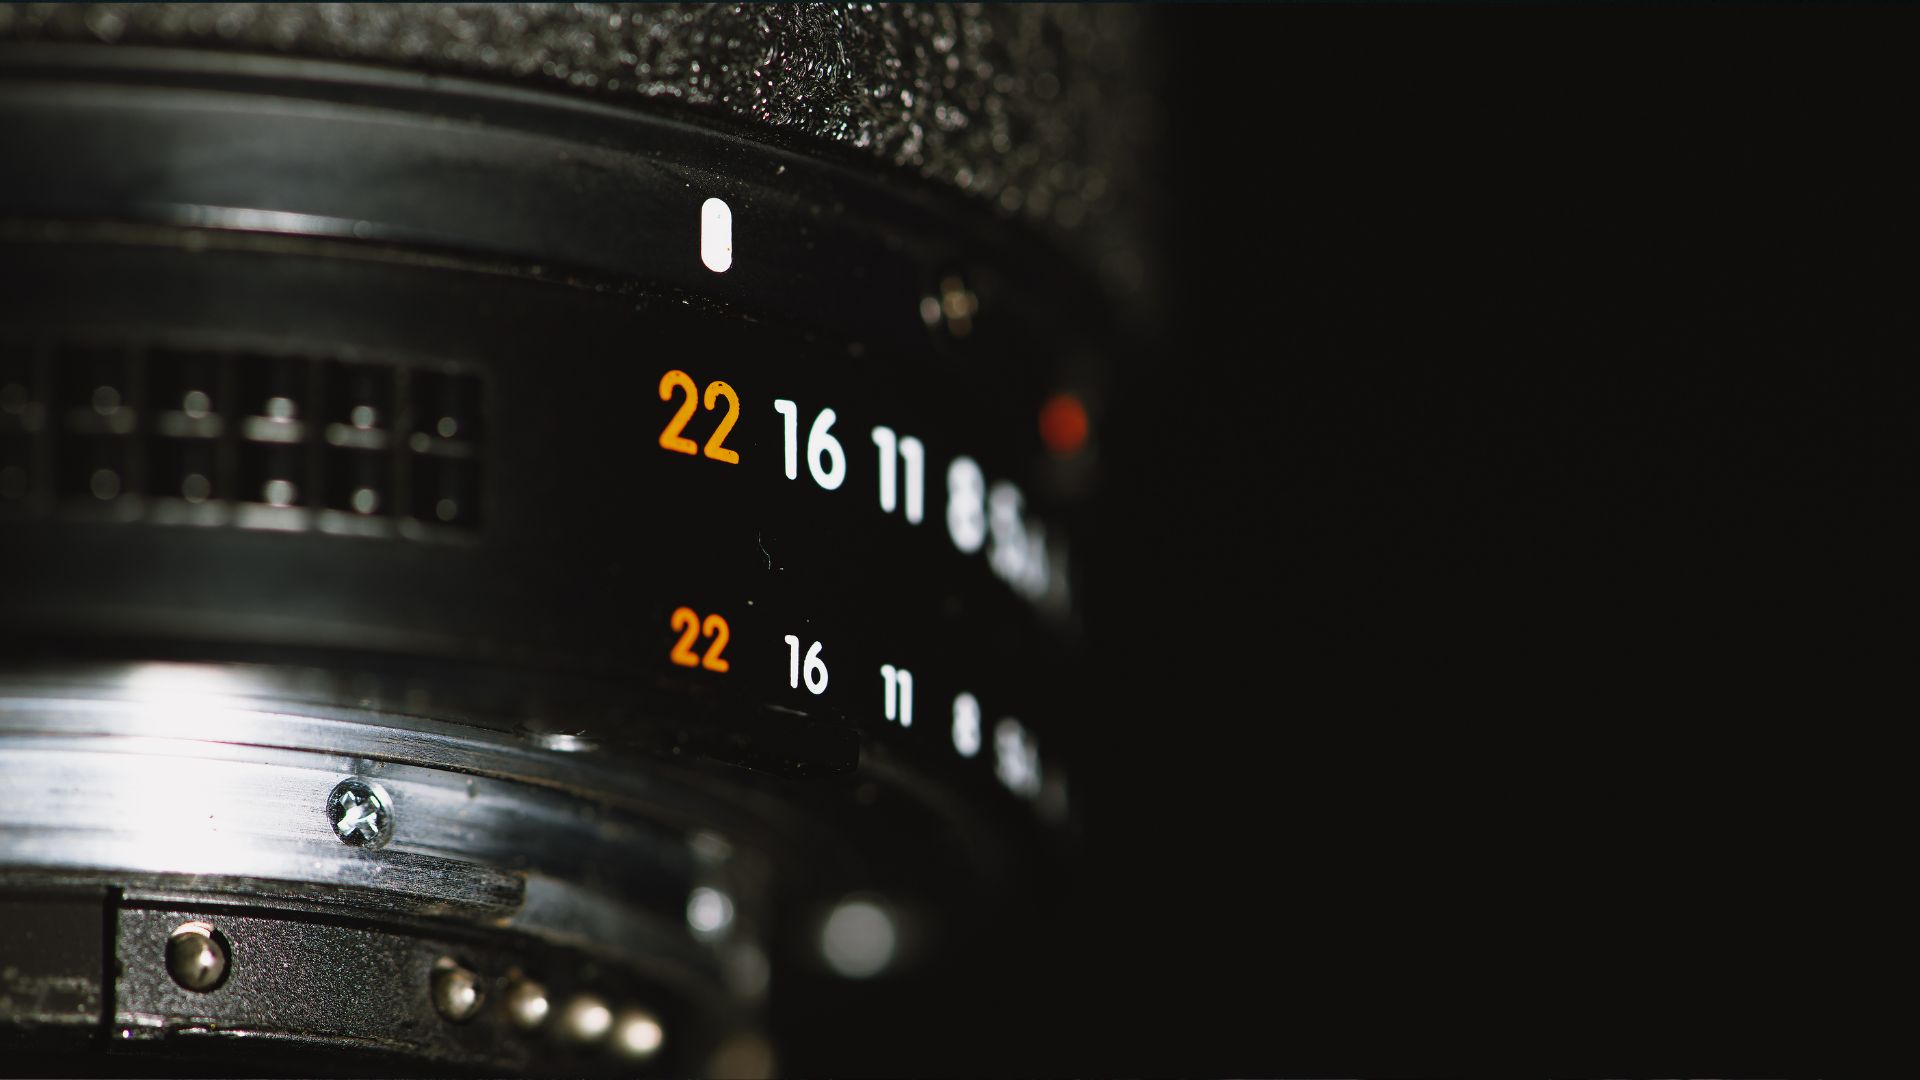 Nikon D850 vs Z7ii and their lenses